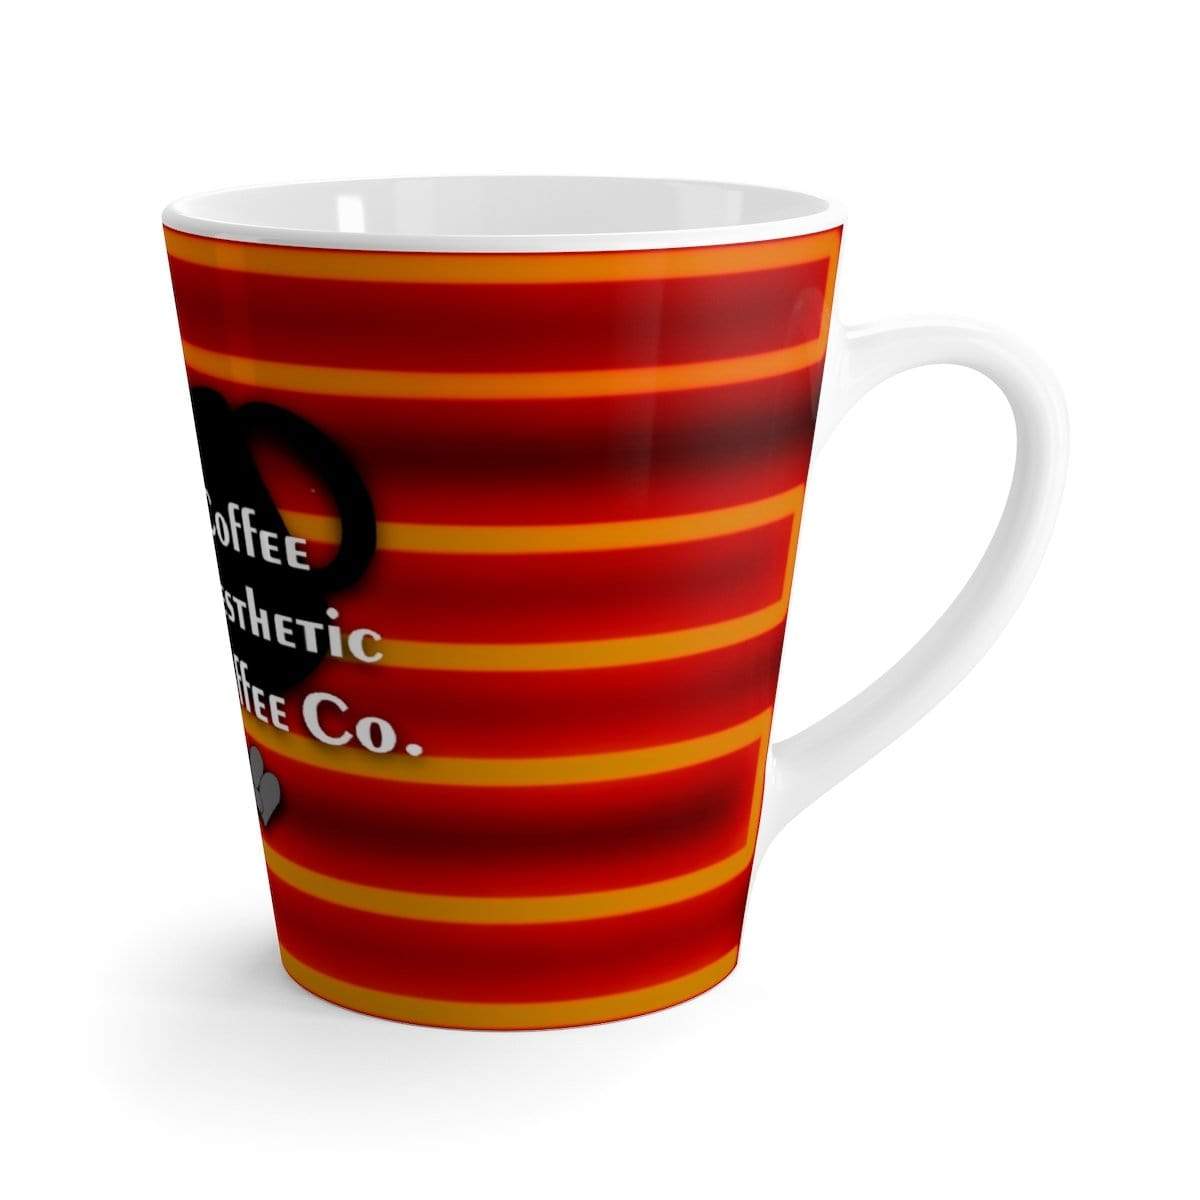 Coffee Aesthetic Coffee Co. Mug 12oz Coffee-Aesthetic.com - Hot - Donut Touch Latte mug